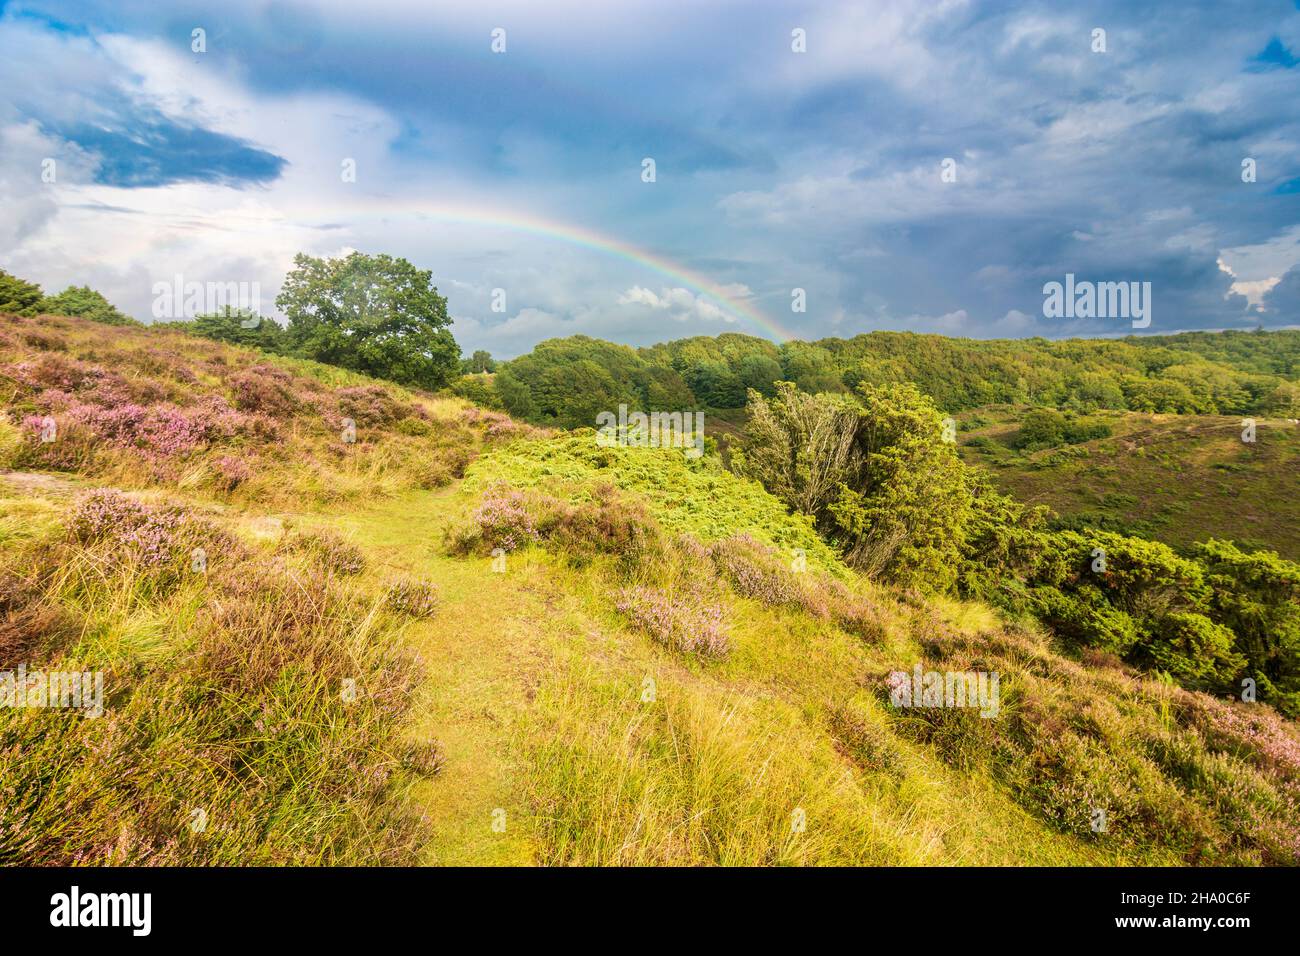 Rebild: Parque Nacional de Rebild, brezo, arco iris, en Rebild Bakker, Jylland, Jutland, Dinamarca Foto de stock